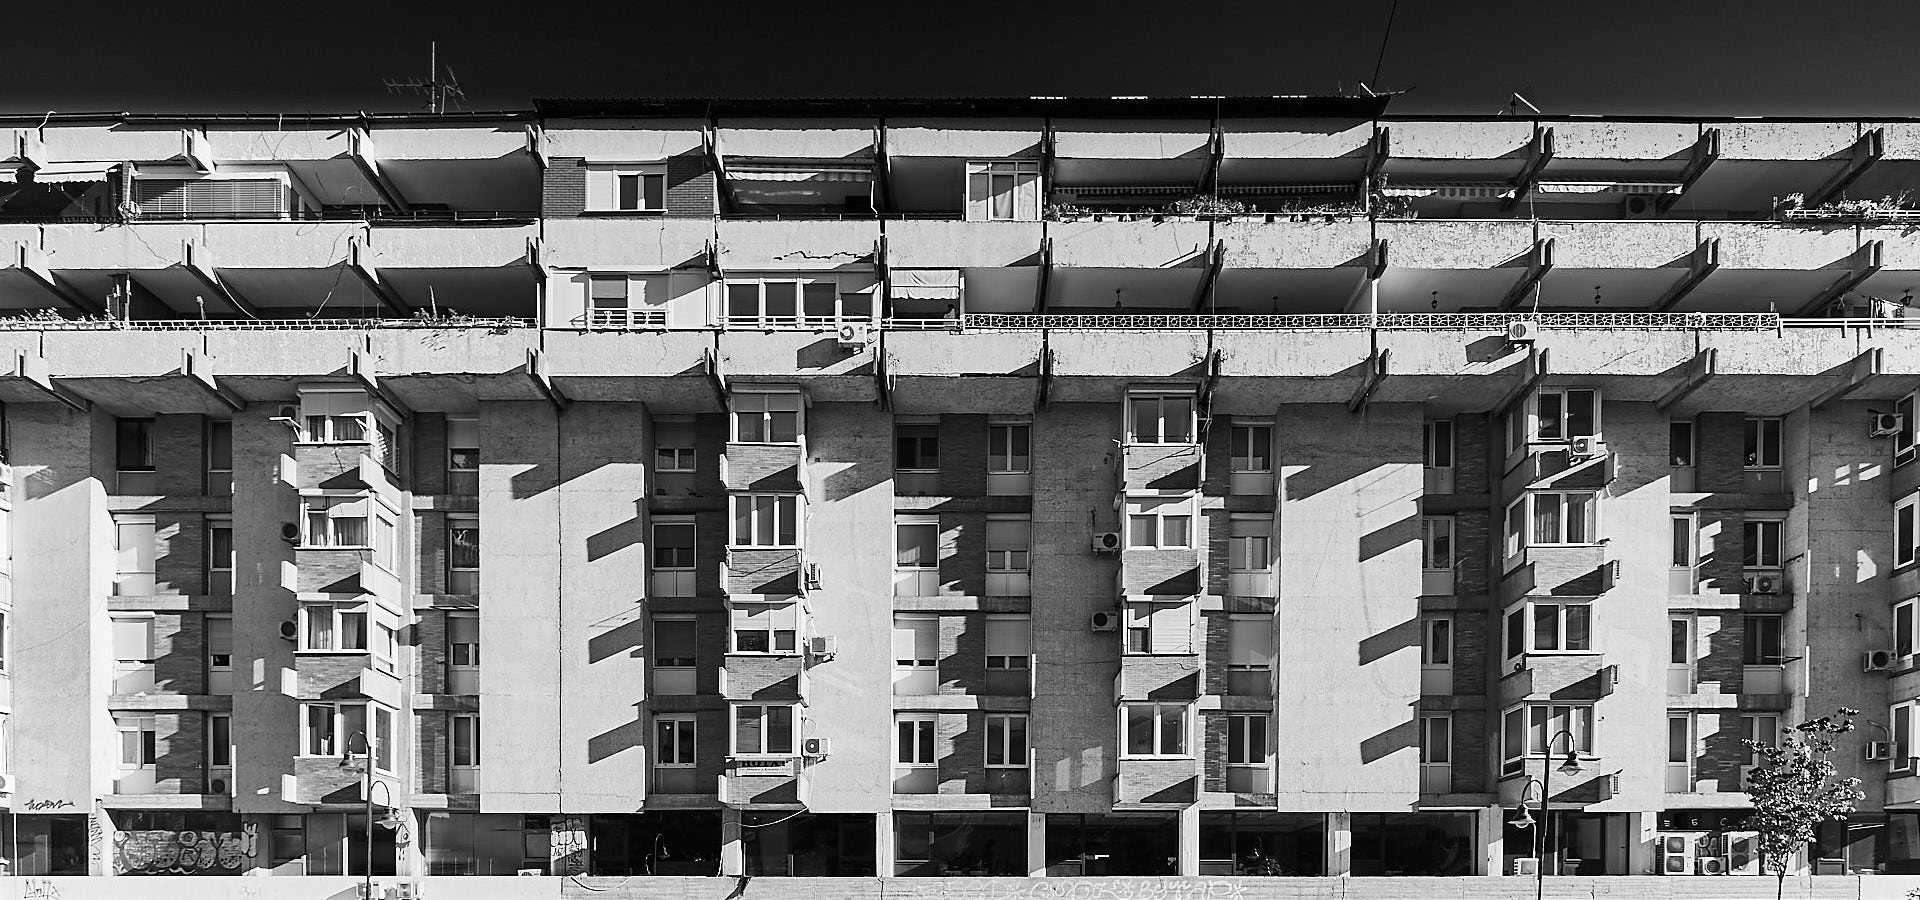 Brutalist housing blocks in Skopje. Image: Vase AMANITO under a CC licence